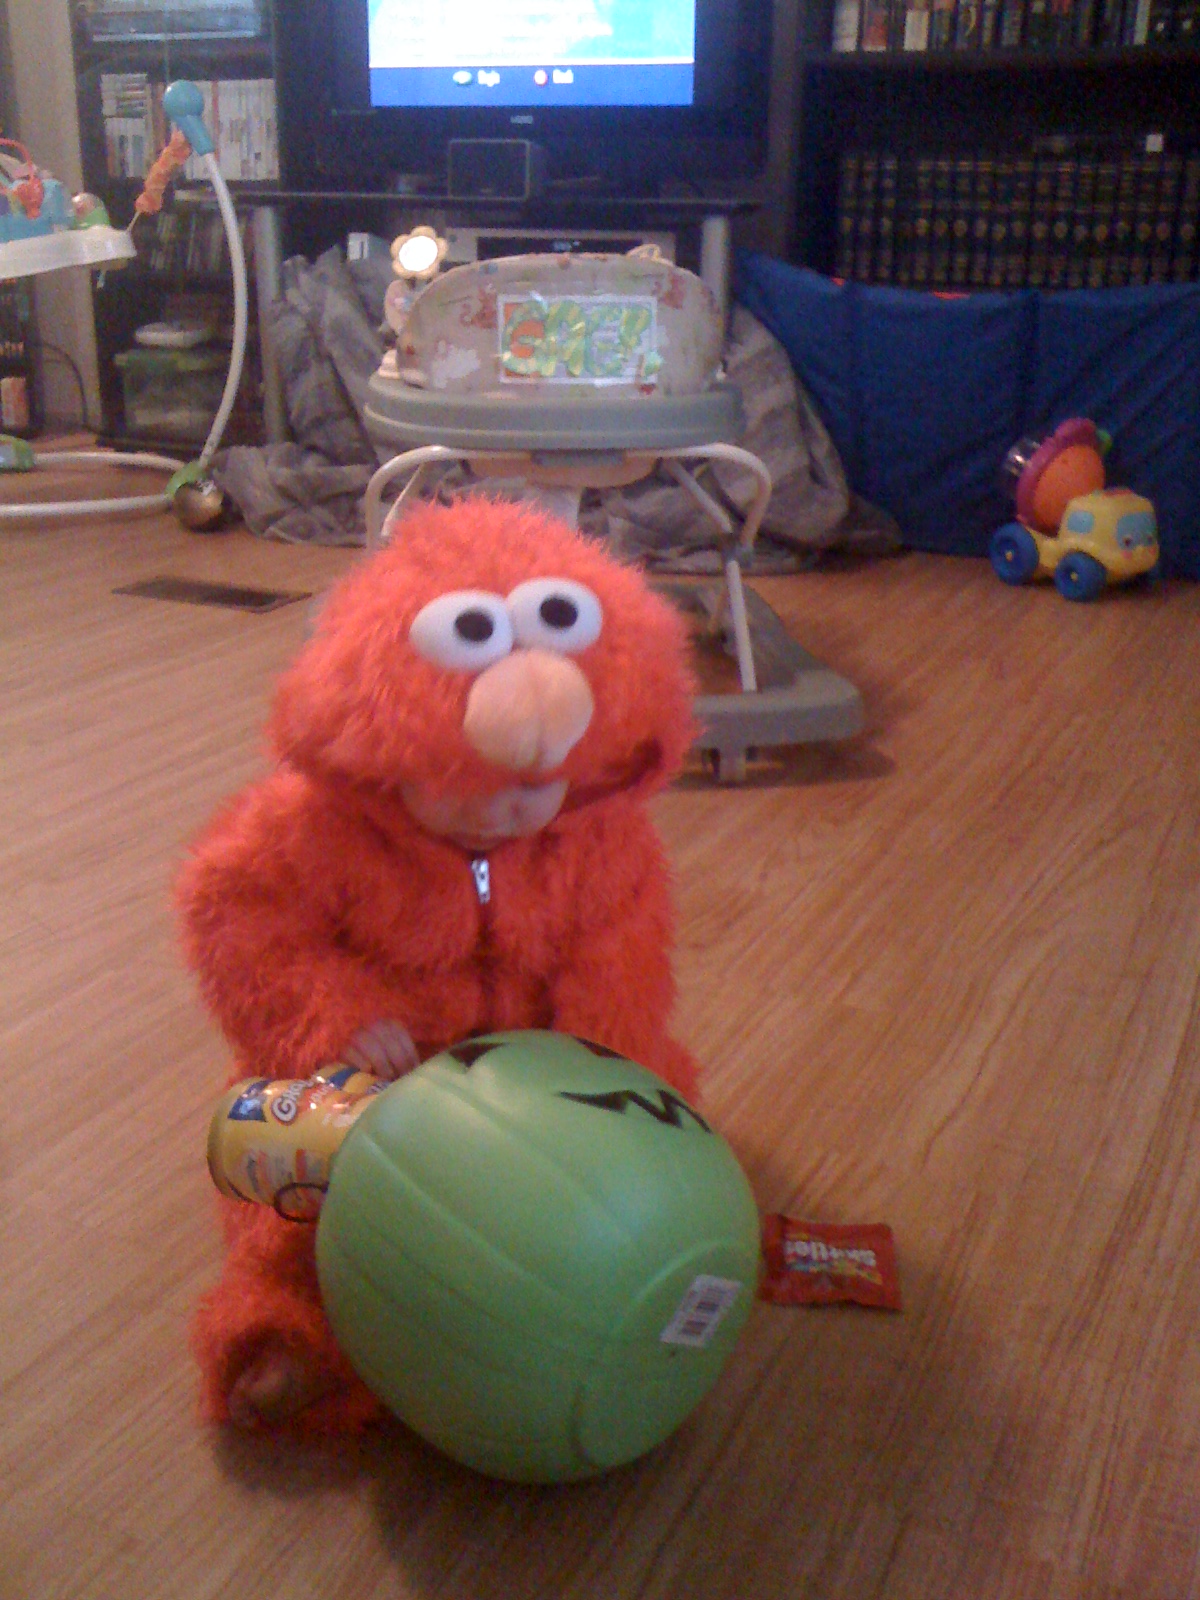 Elmo ate my bebe!